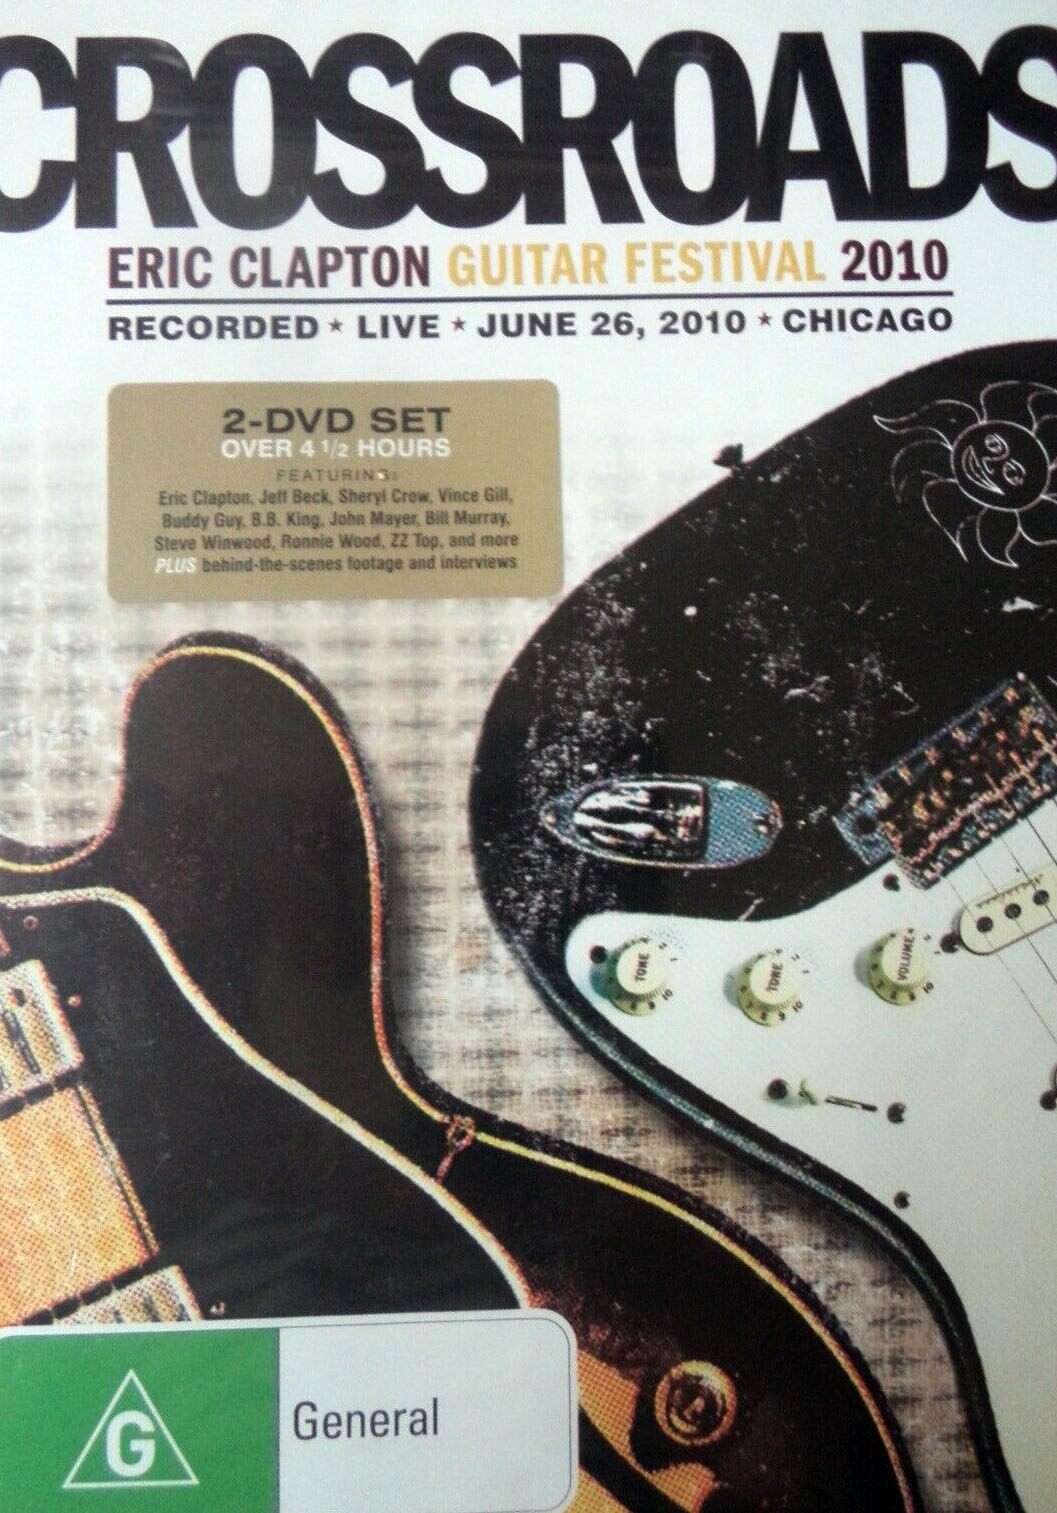 Crossroads Eric Clapton Guitar Festival 2010 2 Disc Set